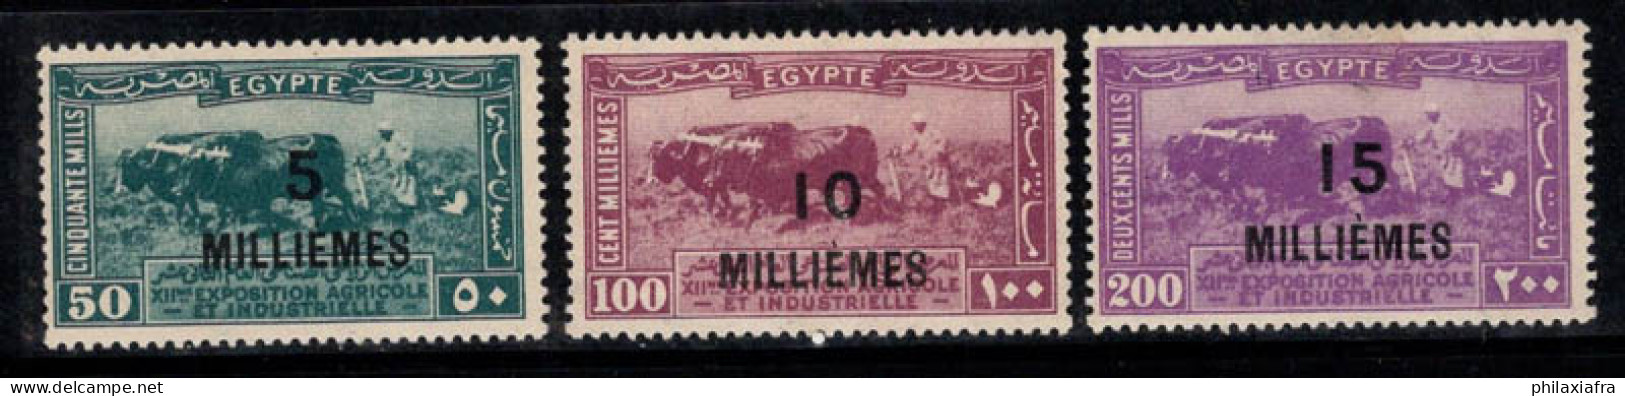 Égypte 1926 Mi. 105-107 Neuf * MH 60% Surimprimé MILLIÈMES - Unused Stamps